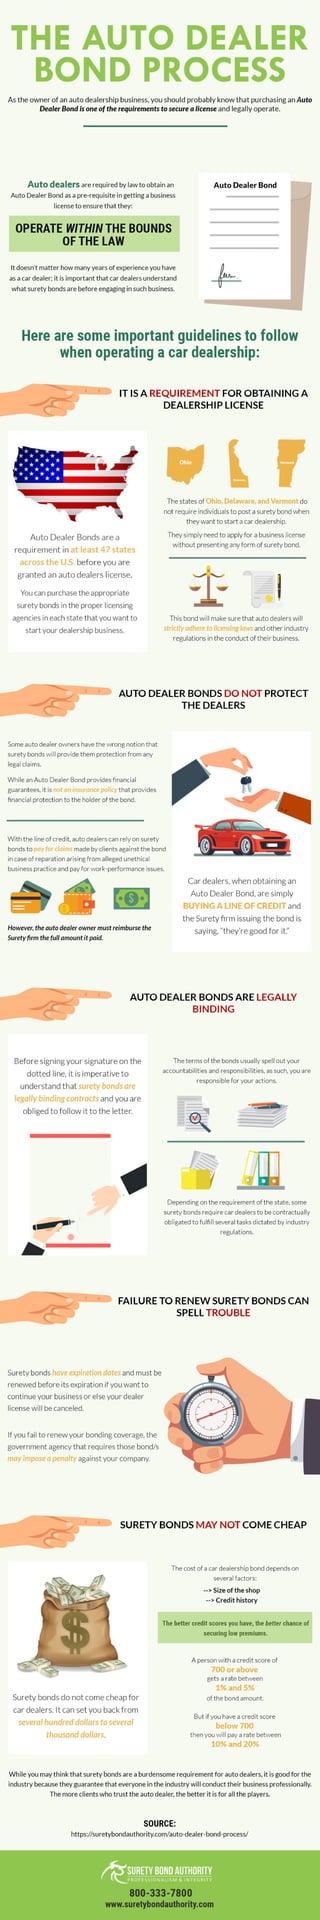 A Car Dealers Guide to obtaining an Auto Dealer Bond